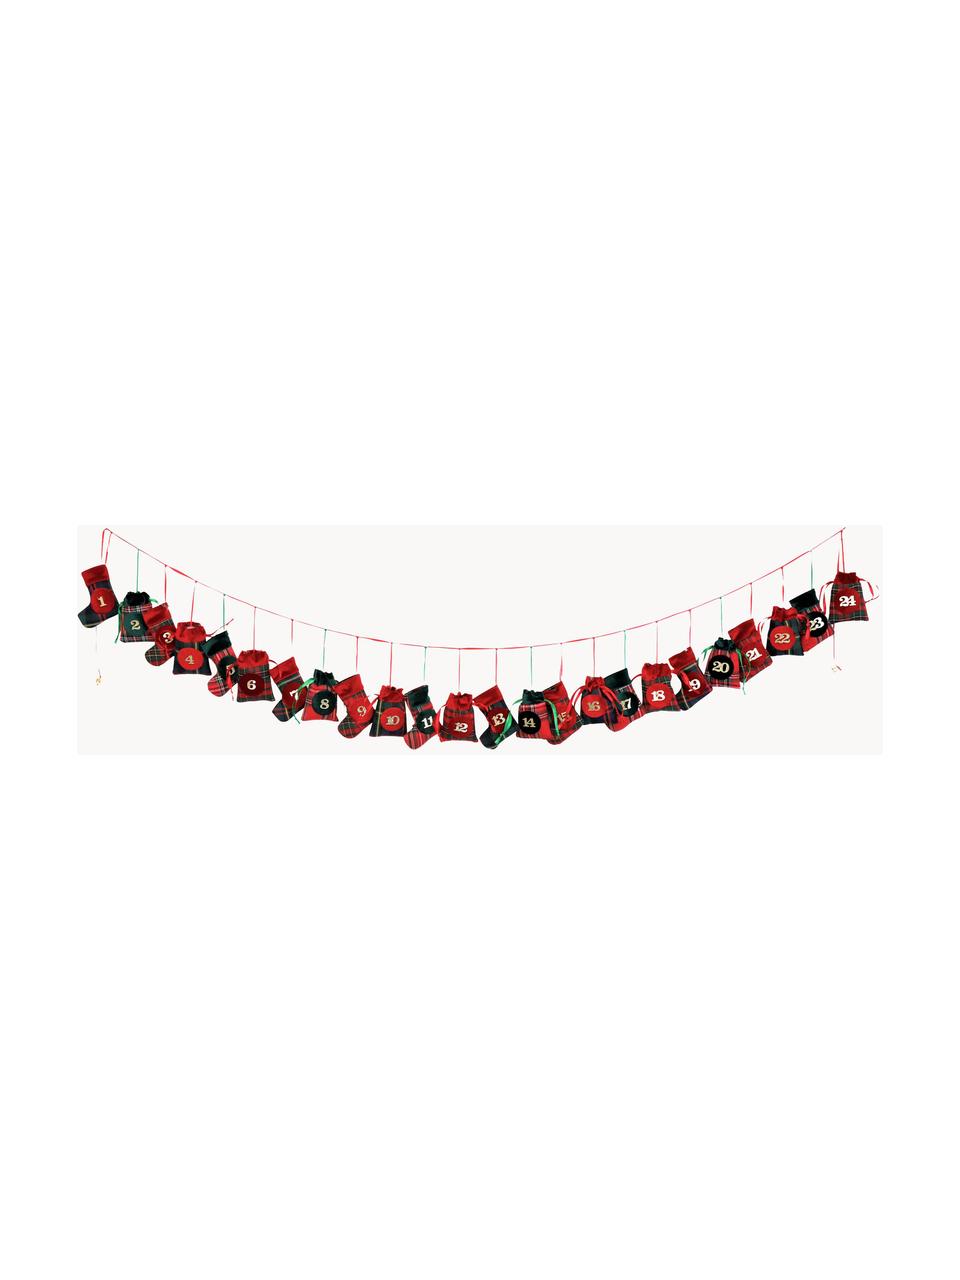 Calendario dell'avvento Merry X-Mas, Poliestere, cotone, Verde, rosso, nero, Lung. 270 cm